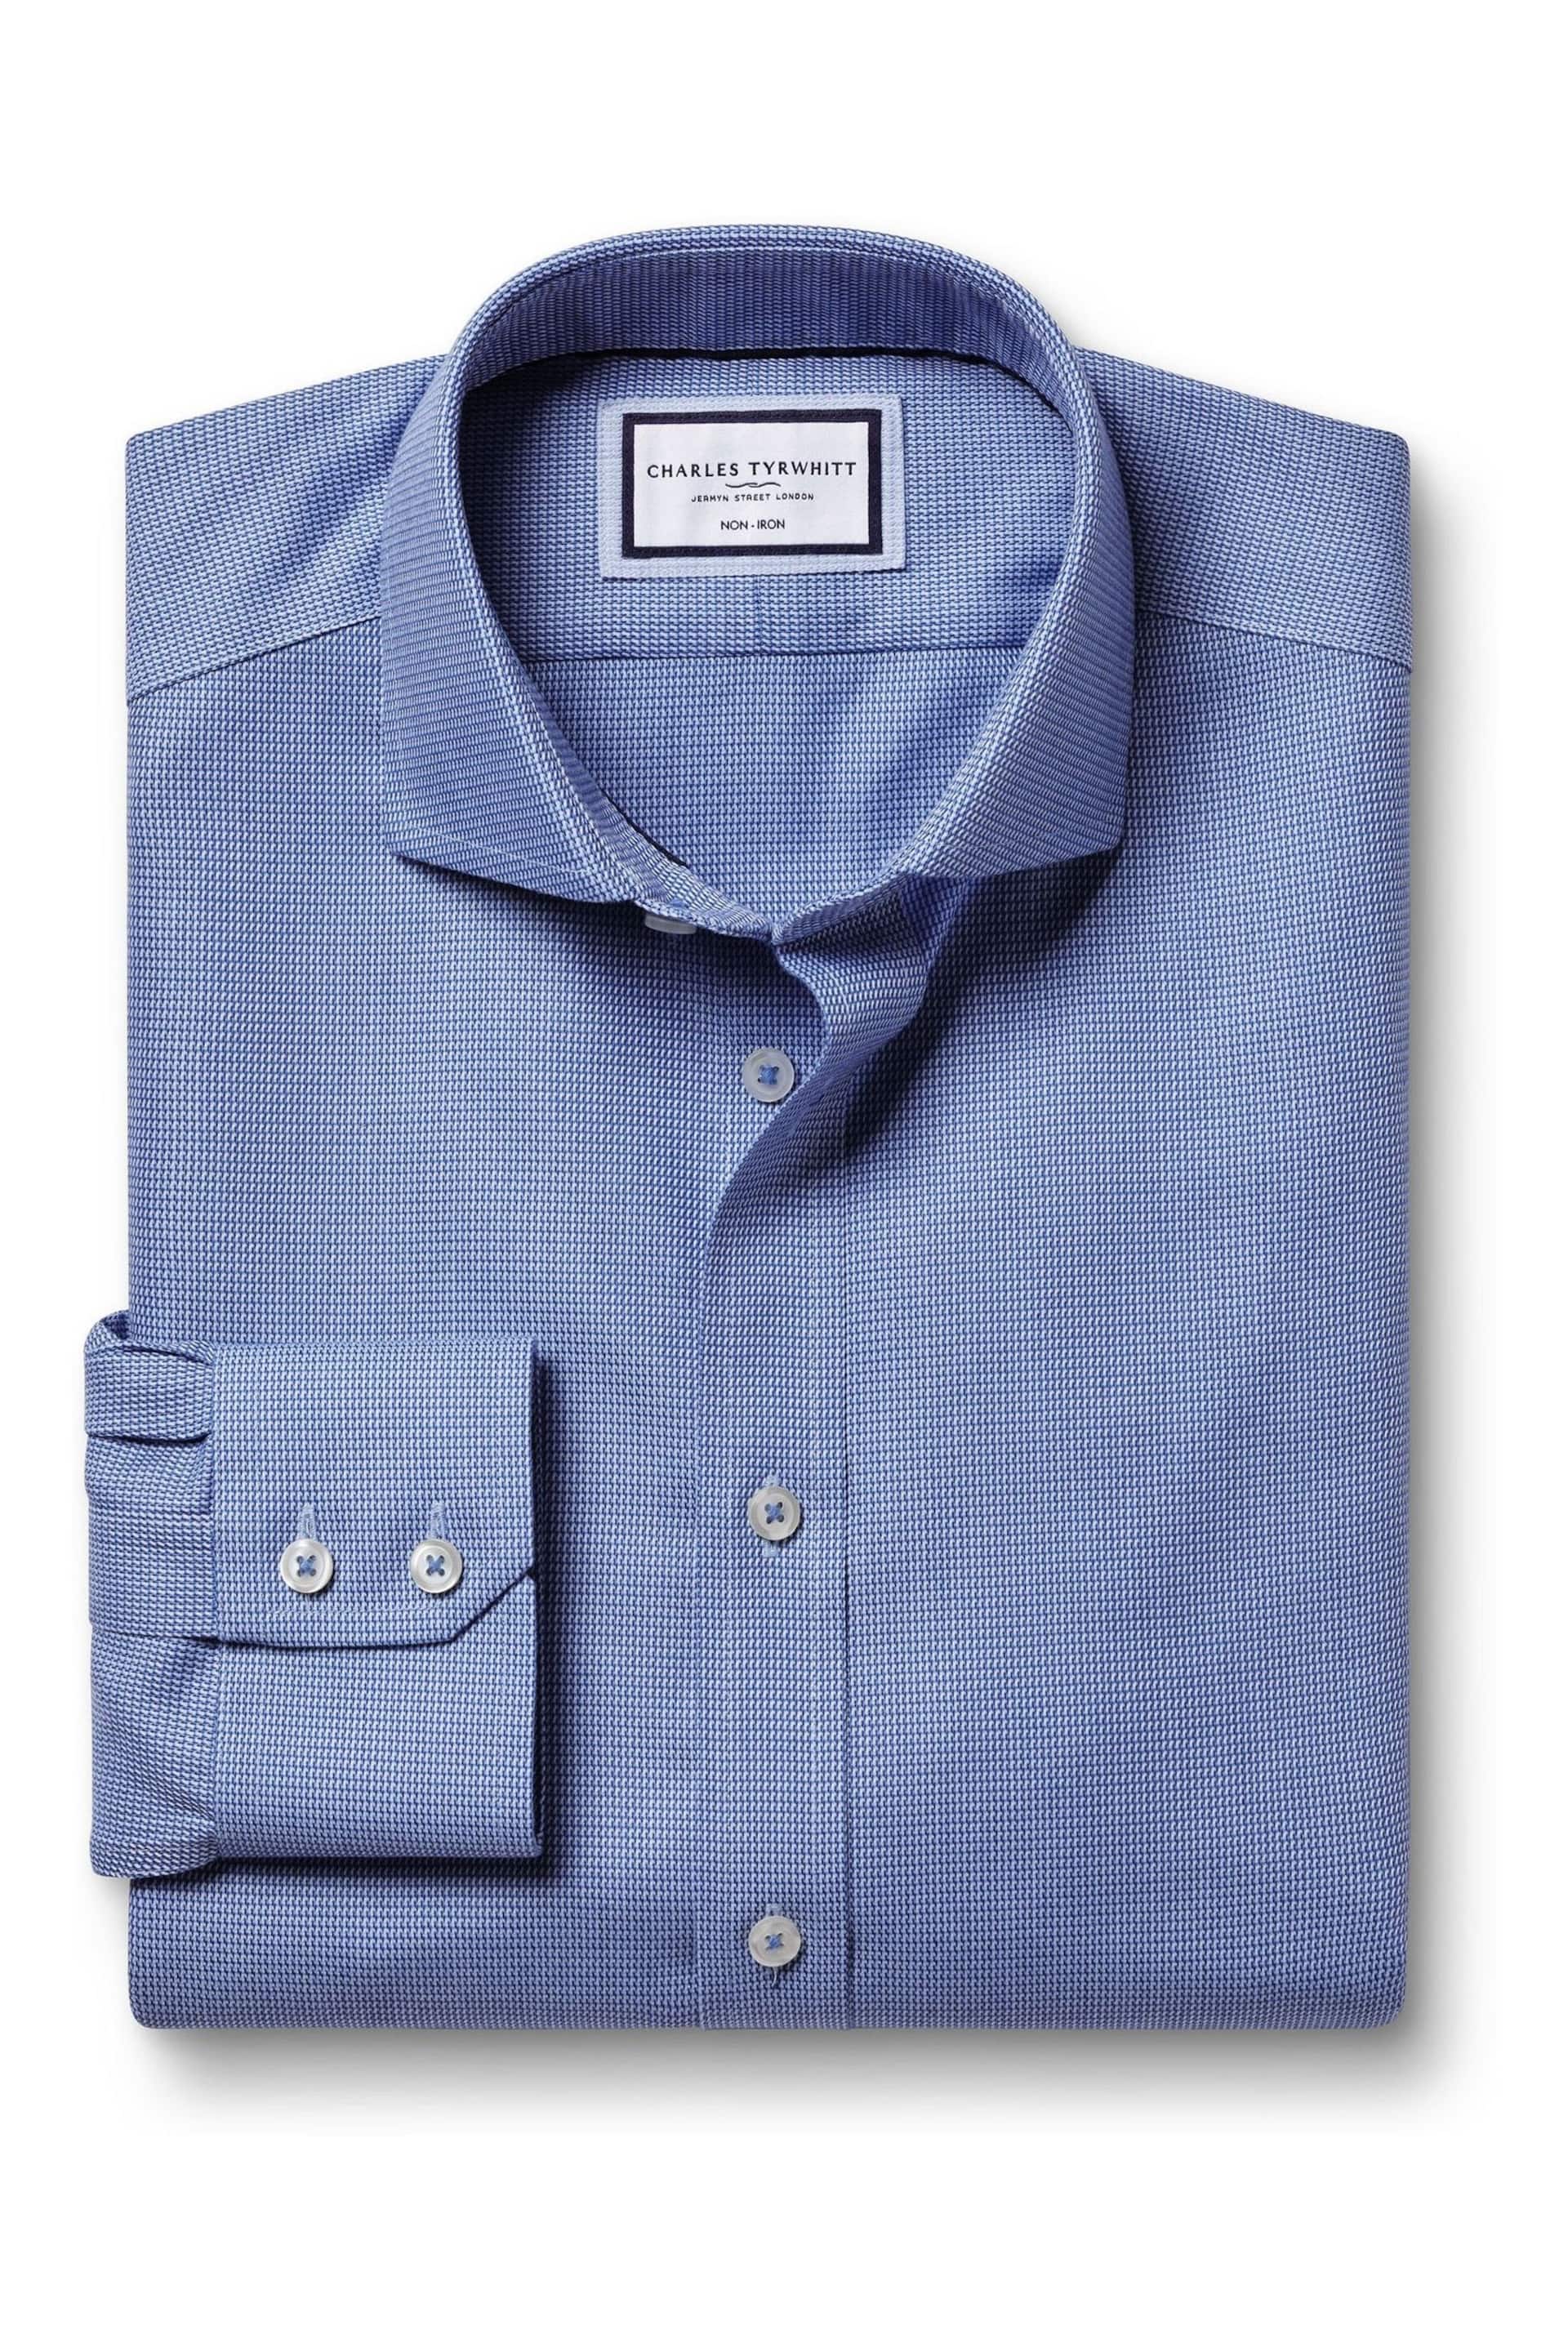 Charles Tyrwhitt Blue Non-iron Mayfair Weave Cutaway Slim Fit Shirt - Image 3 of 5